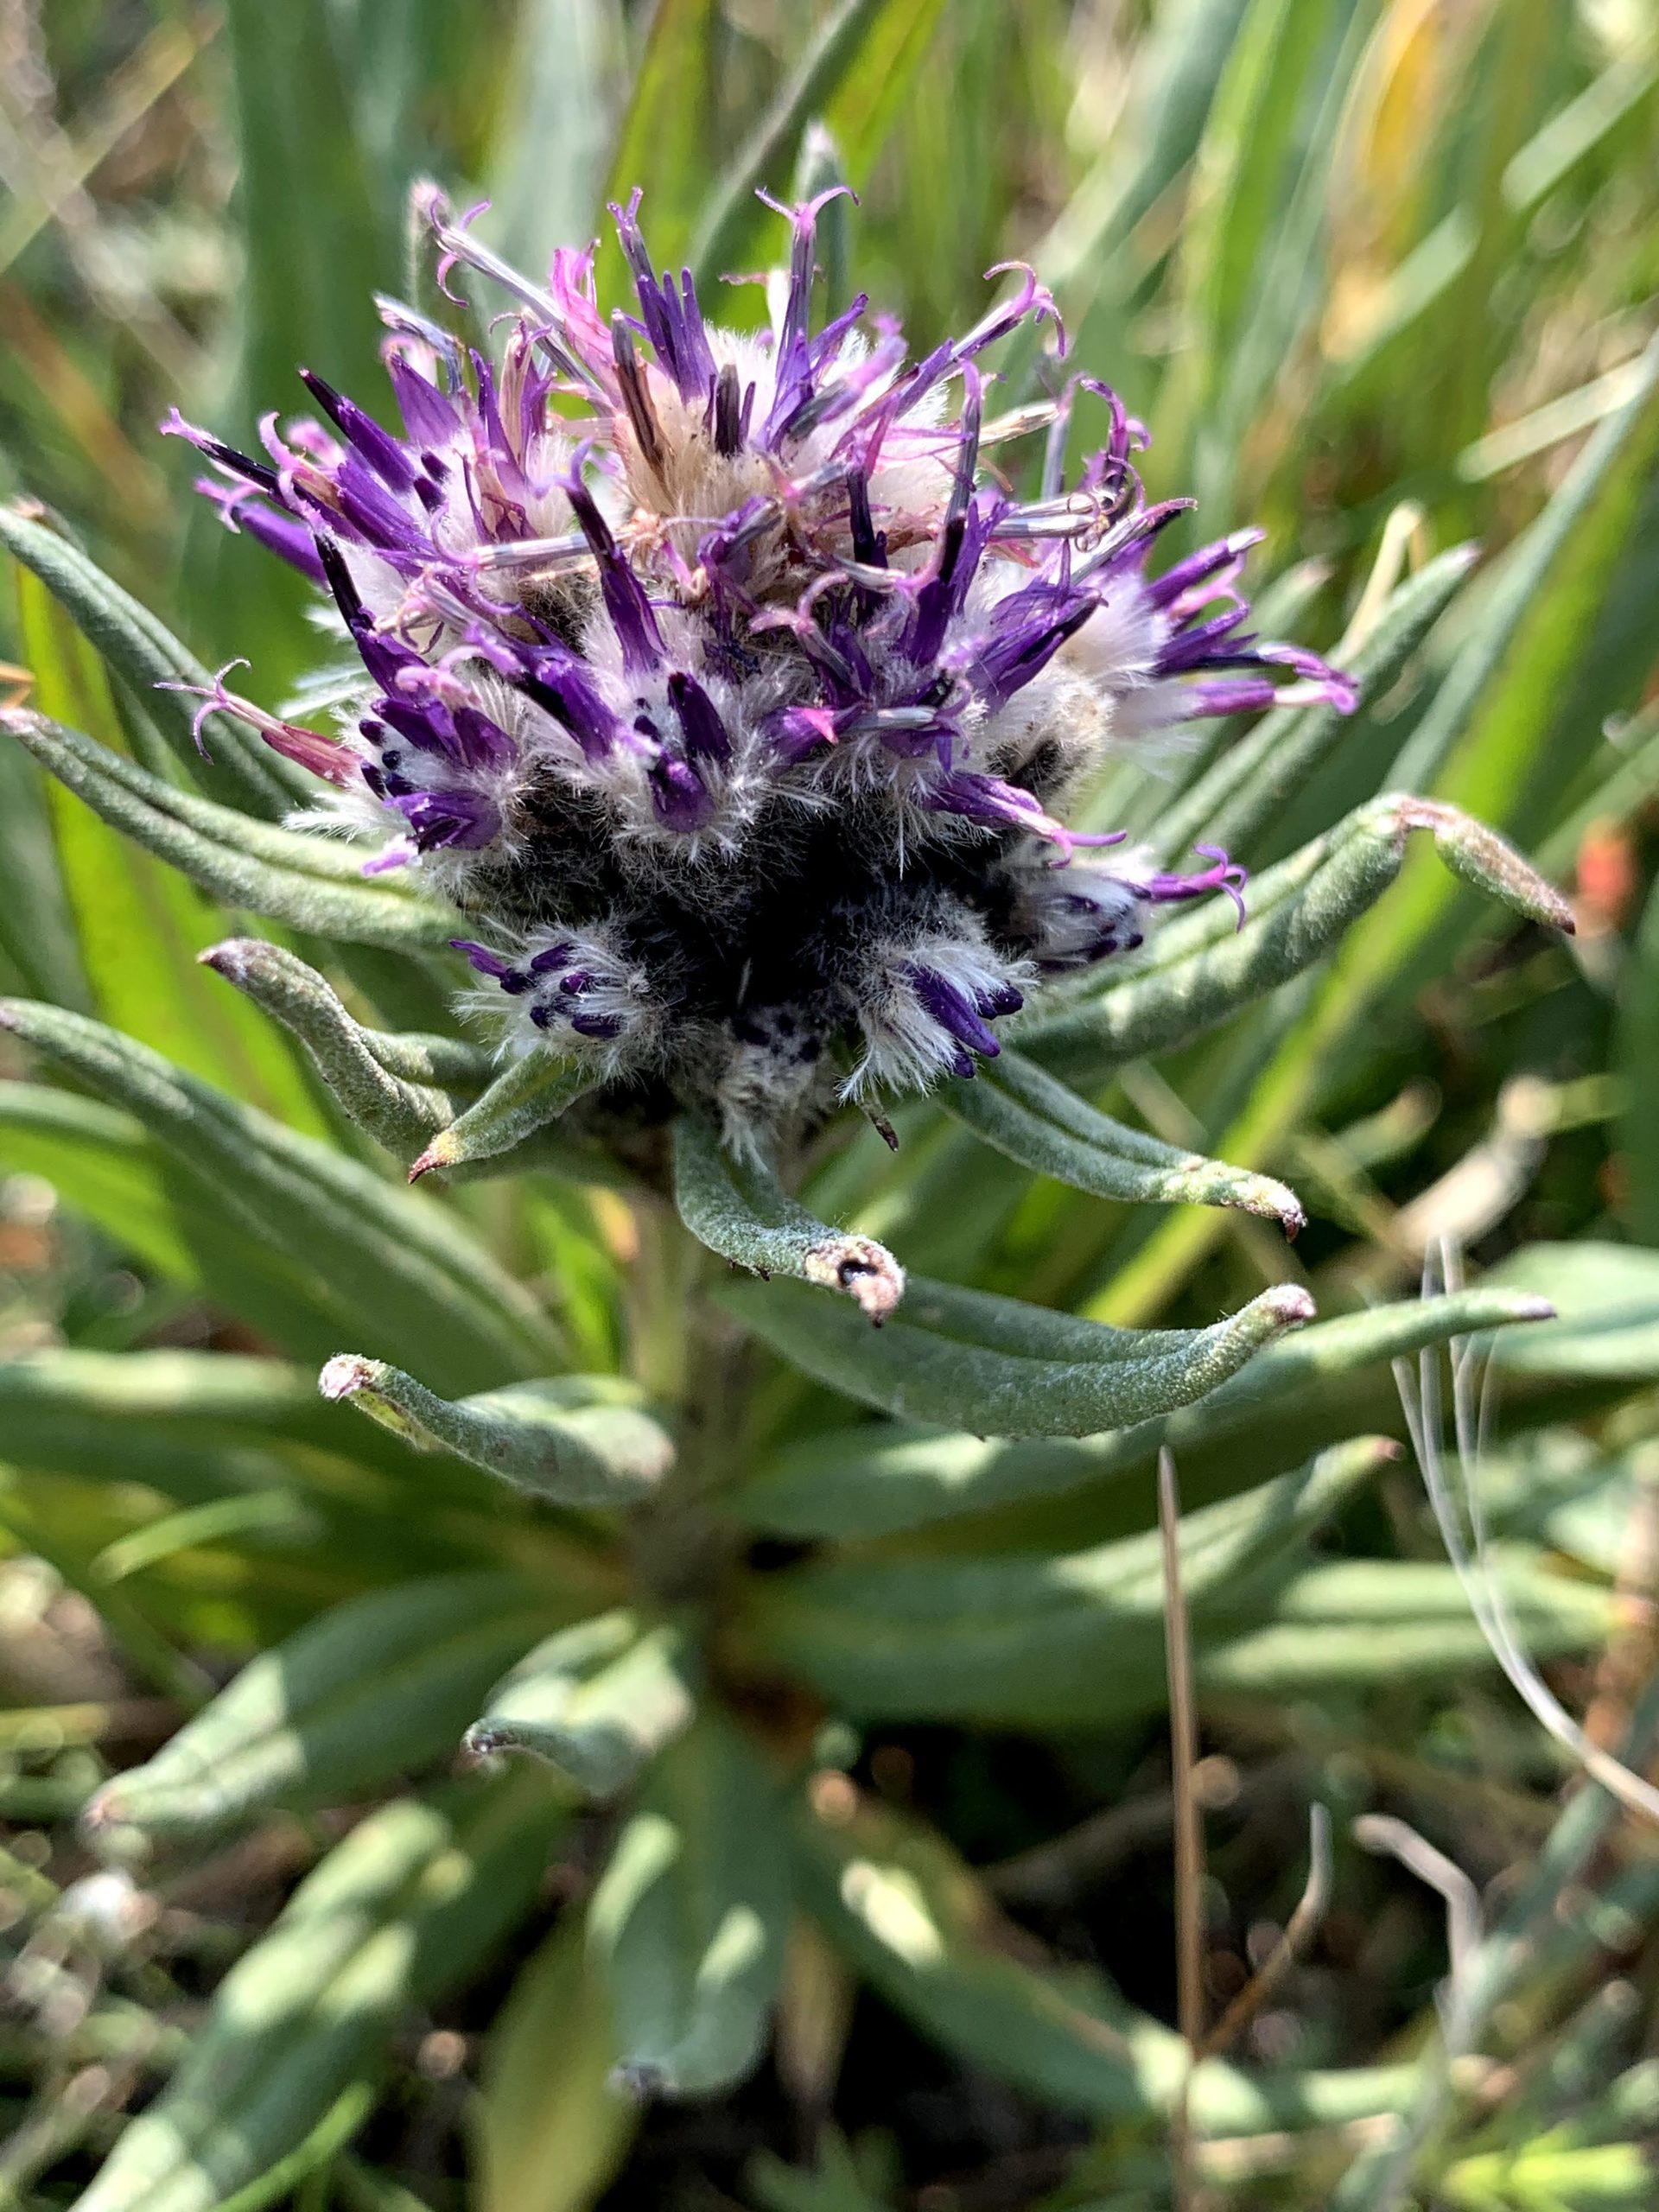 Weber's Saw-Wort (Saussurea weberi), a fuzzy. purple flower.